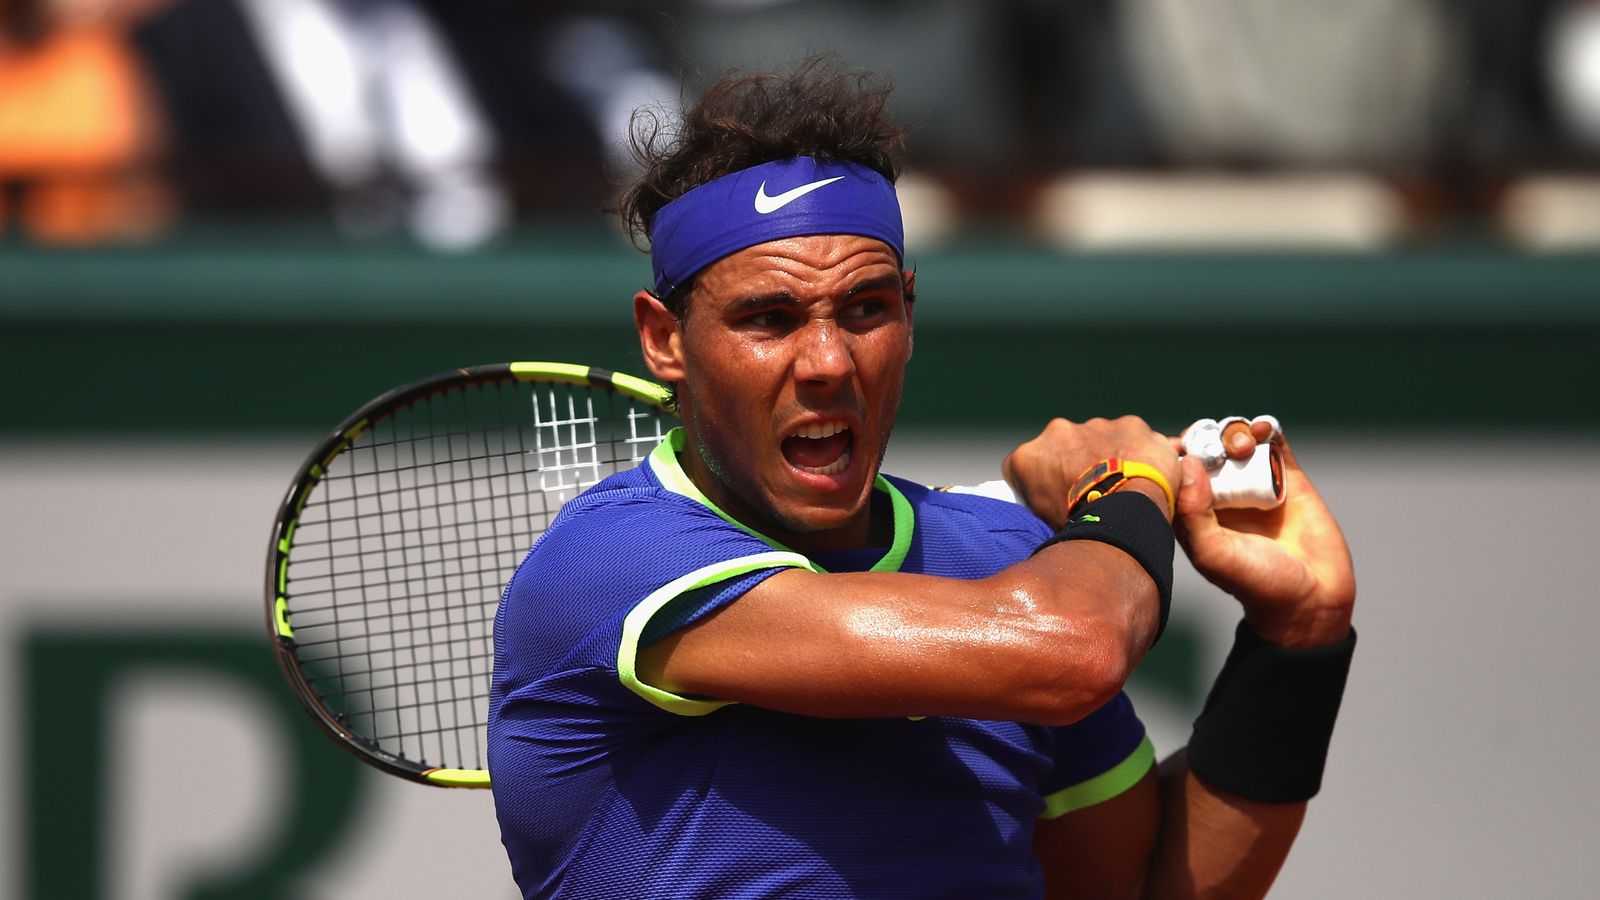 Rafa Nadal already qualified for ATP World Tour Finals Tennis News